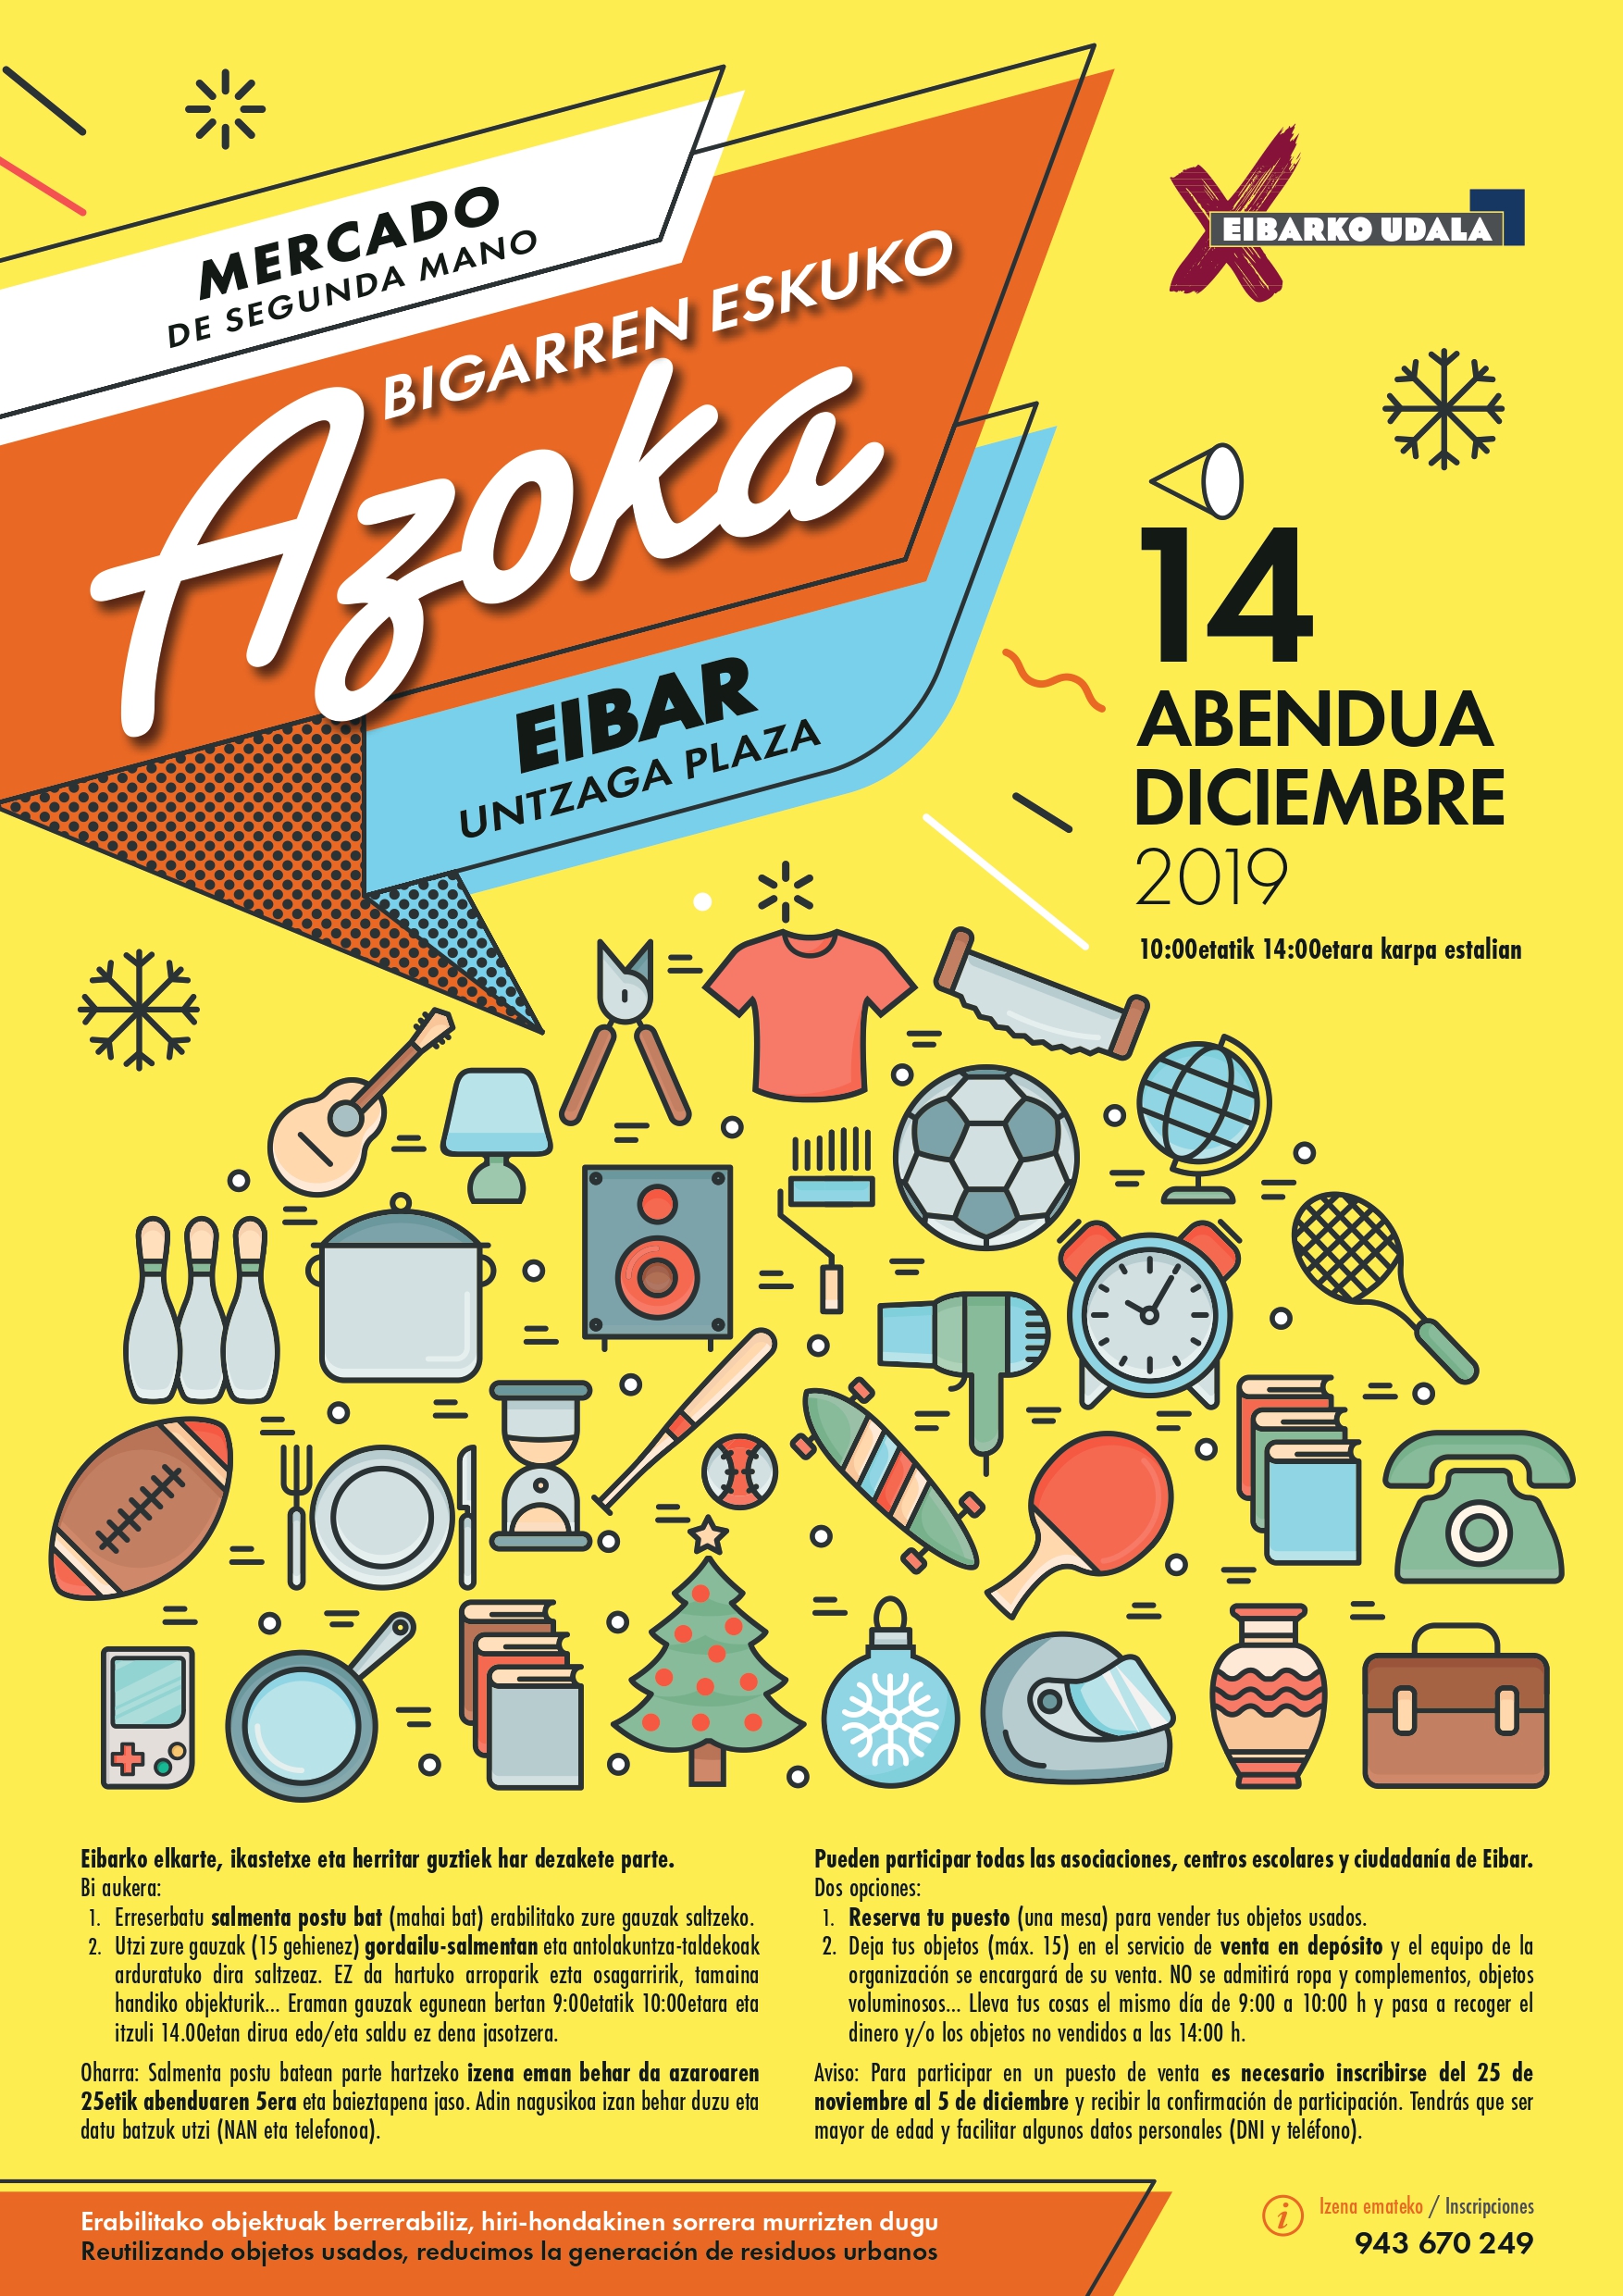 Eibar acogerá un mercado de segunda mano el próximo 14 de diciembre